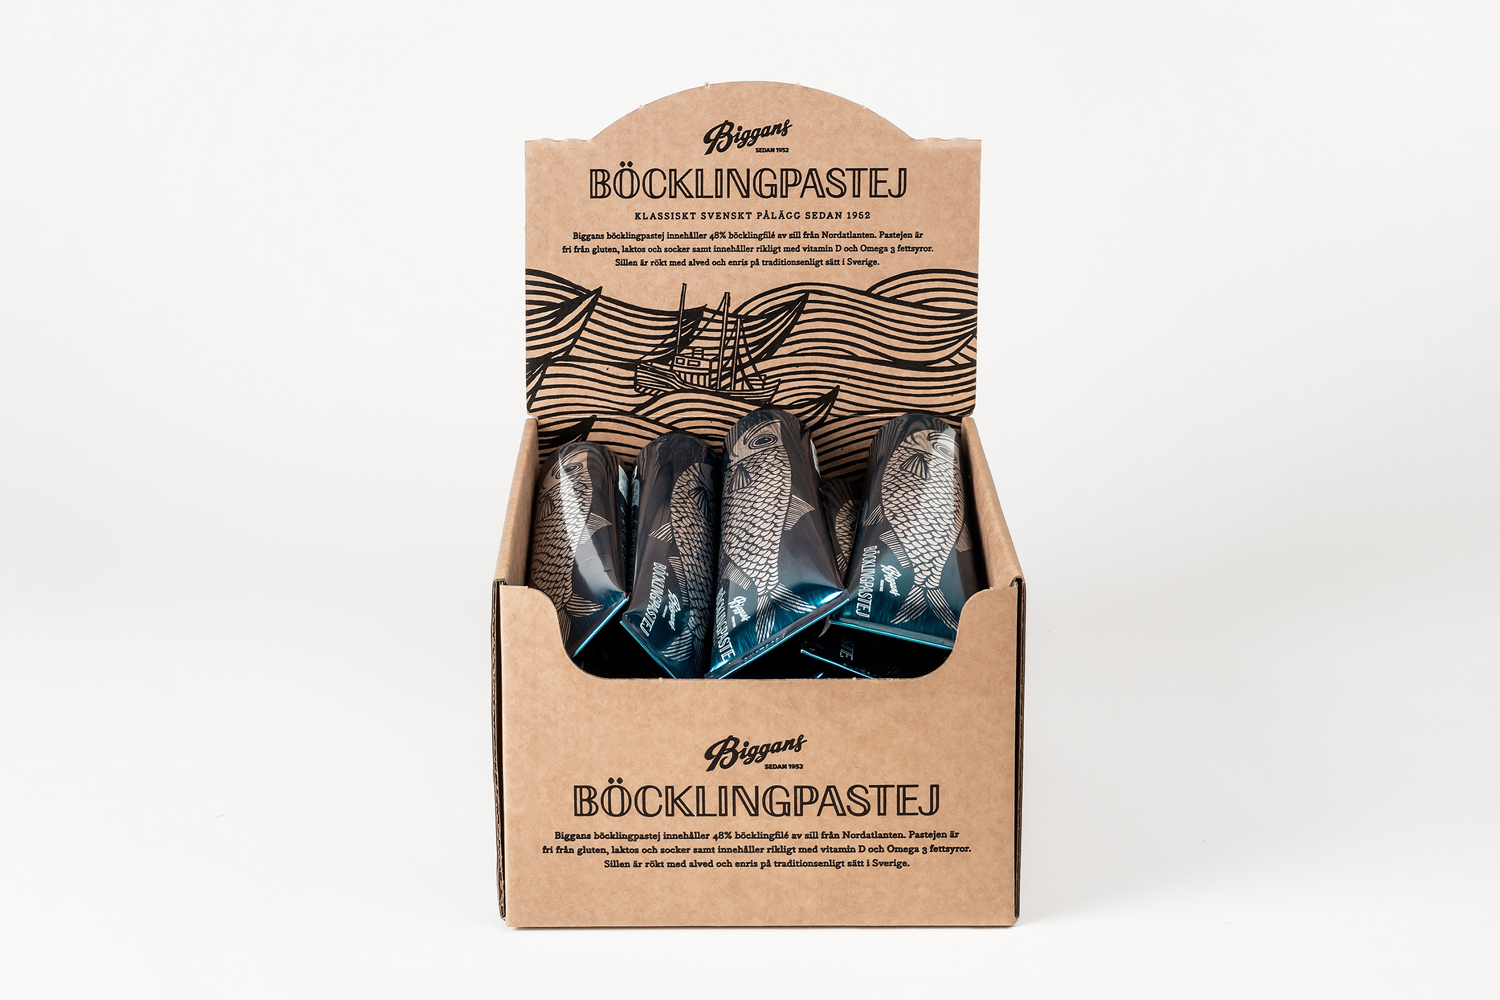 Package design and POS for Biggans Böcklingpastej by Bedow, Sweden